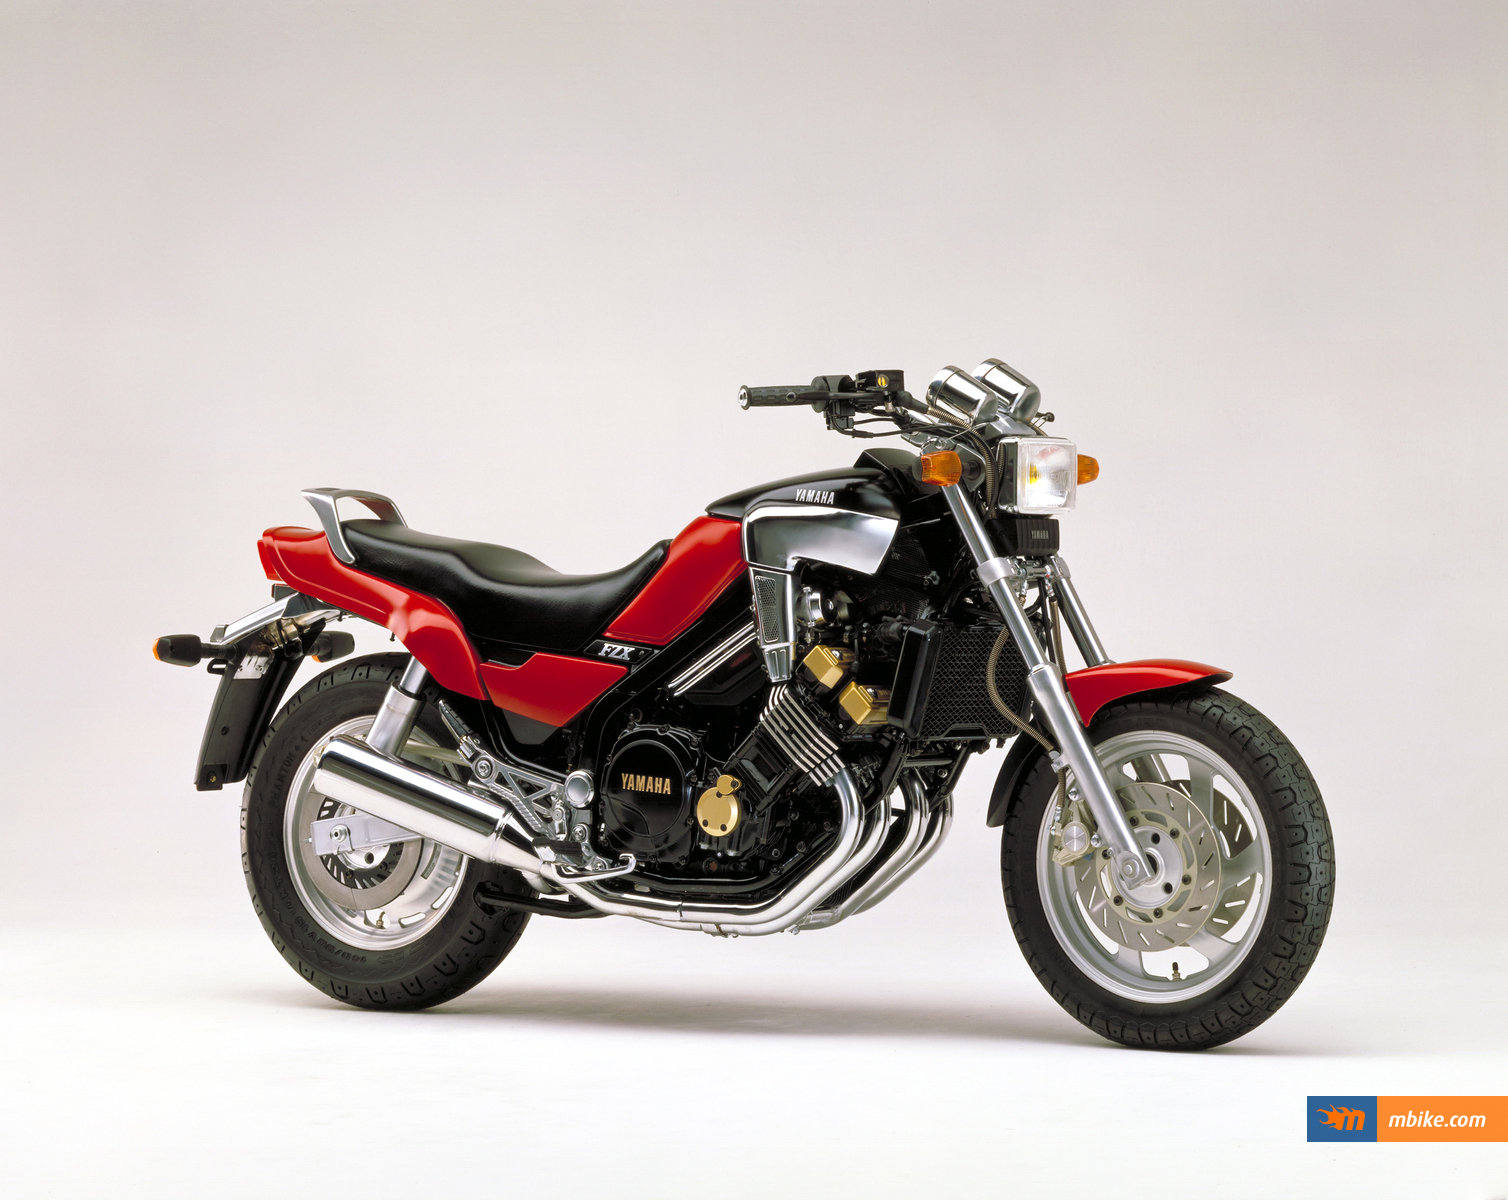 1987 Yamaha FZX 750